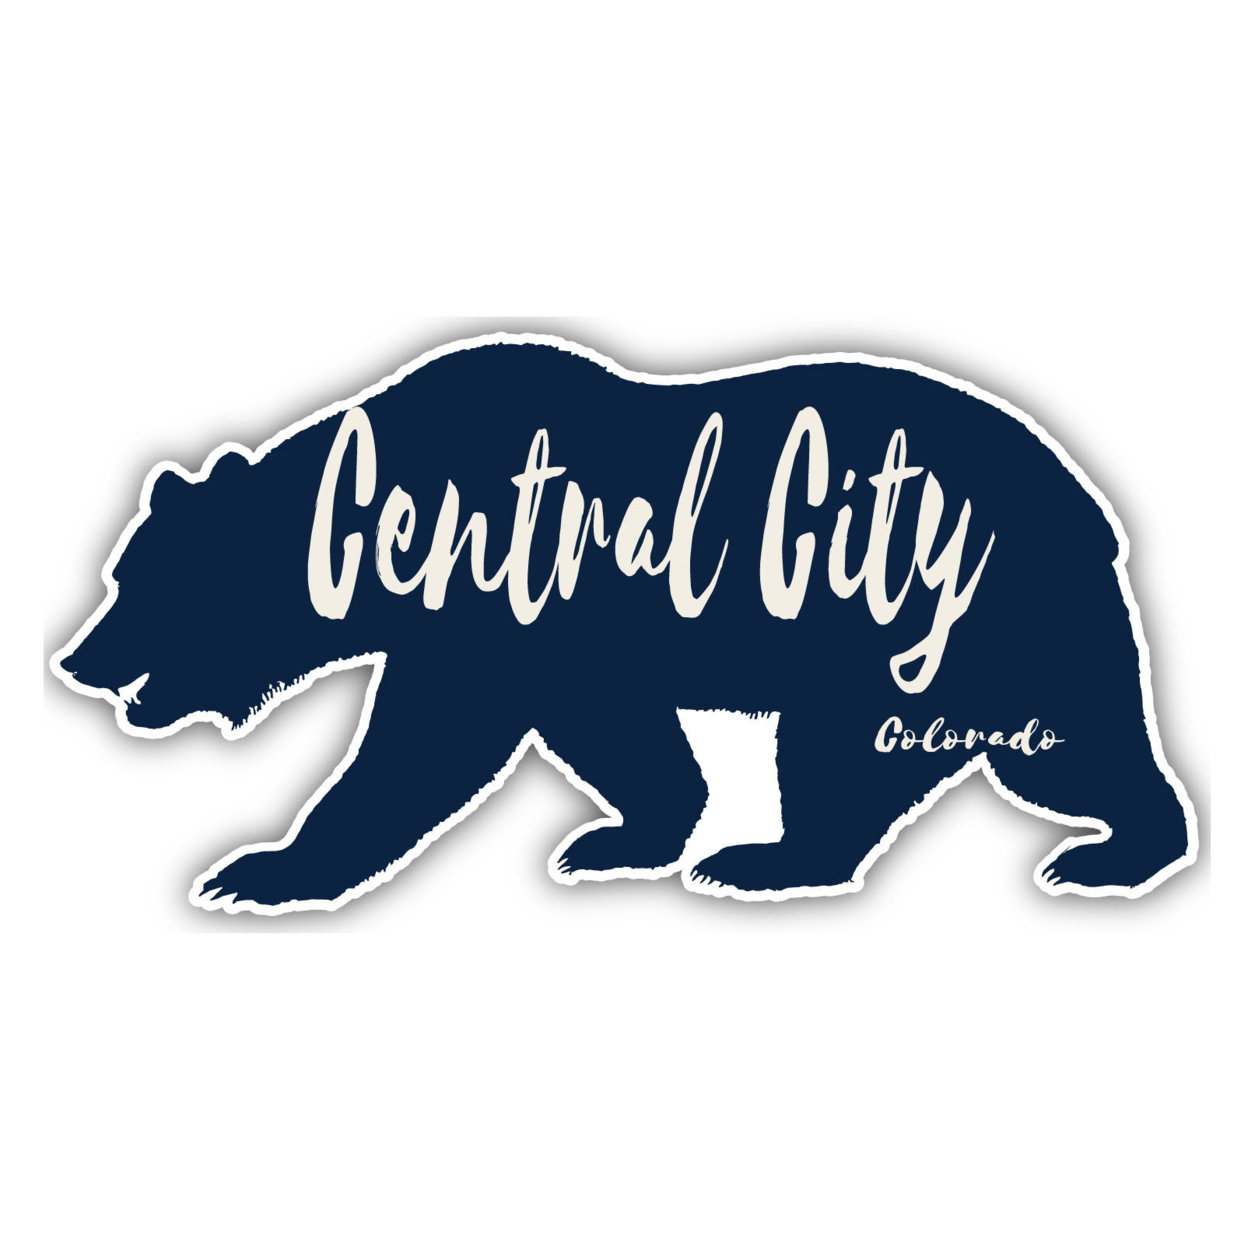 Central City Colorado Souvenir Decorative Stickers (Choose Theme And Size) - Single Unit, 8-Inch, Tent